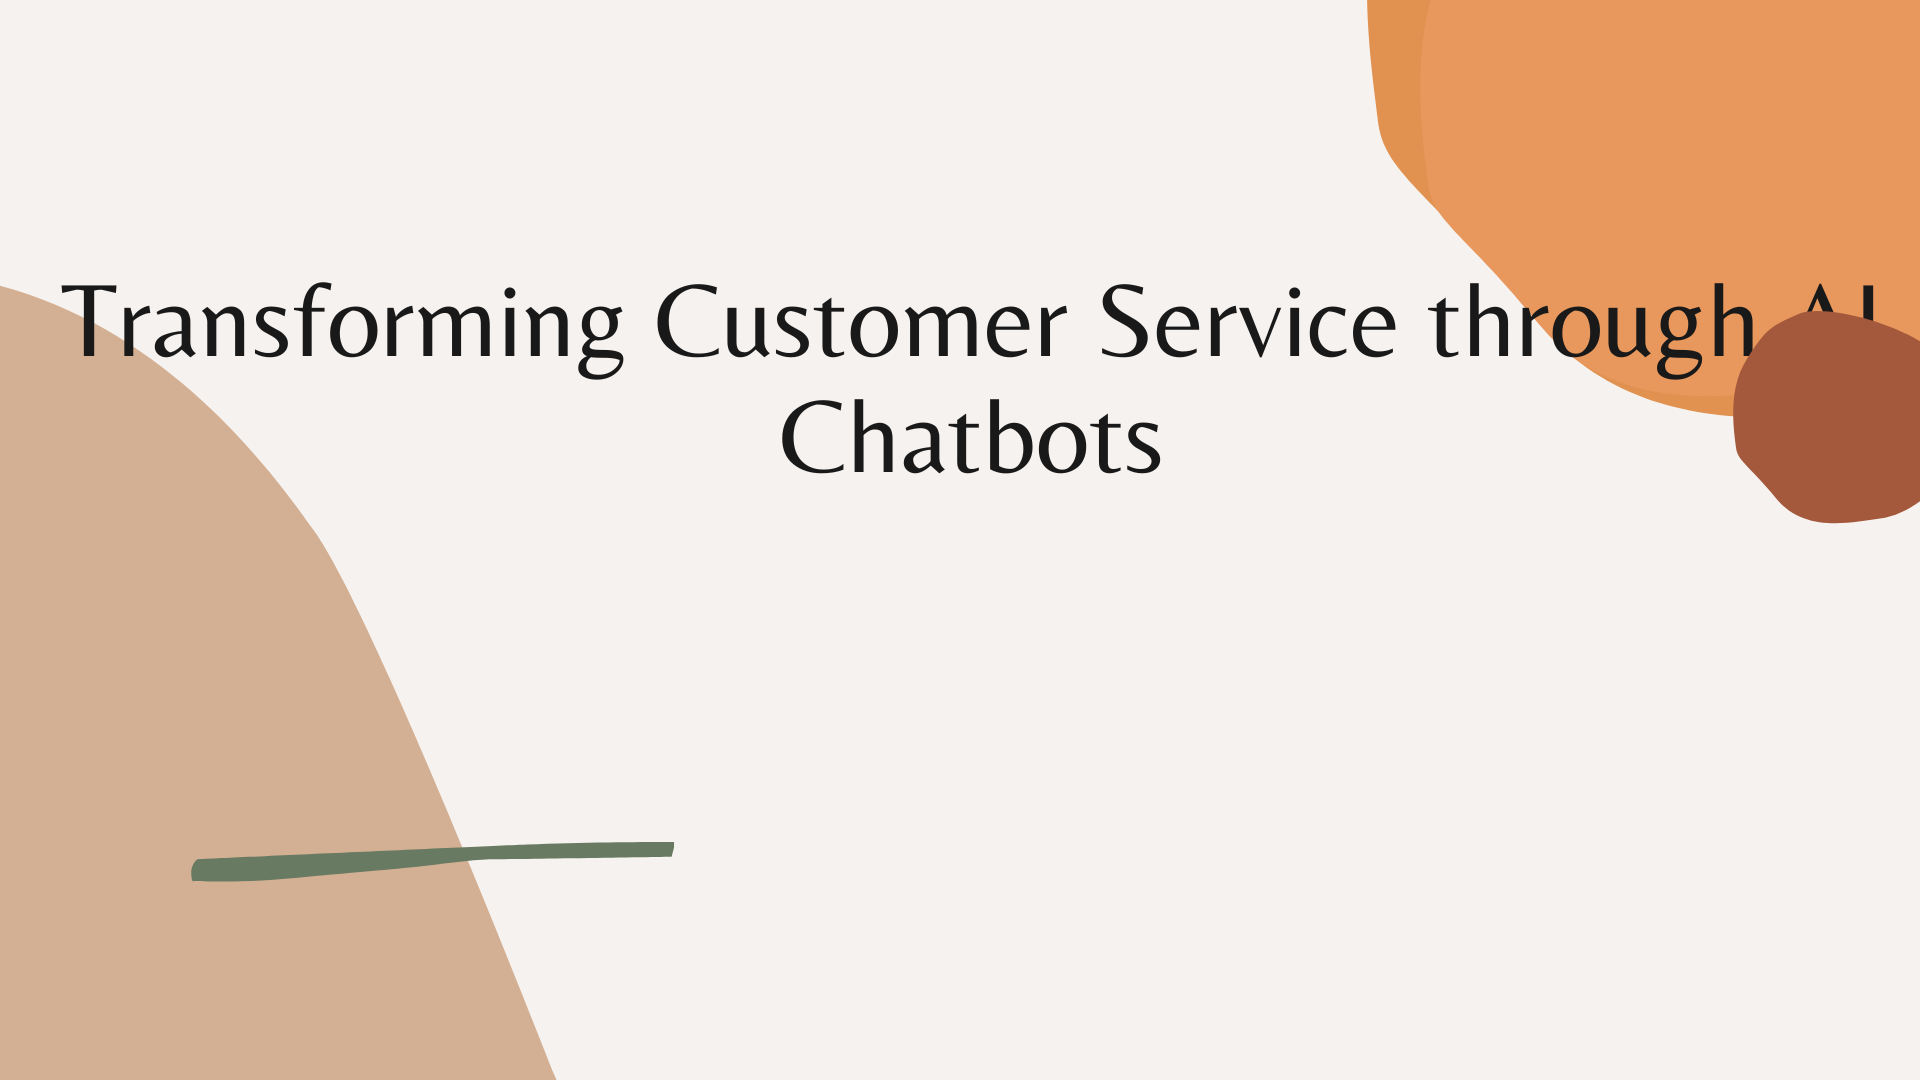 Transforming Customer Service through AI Chatbots